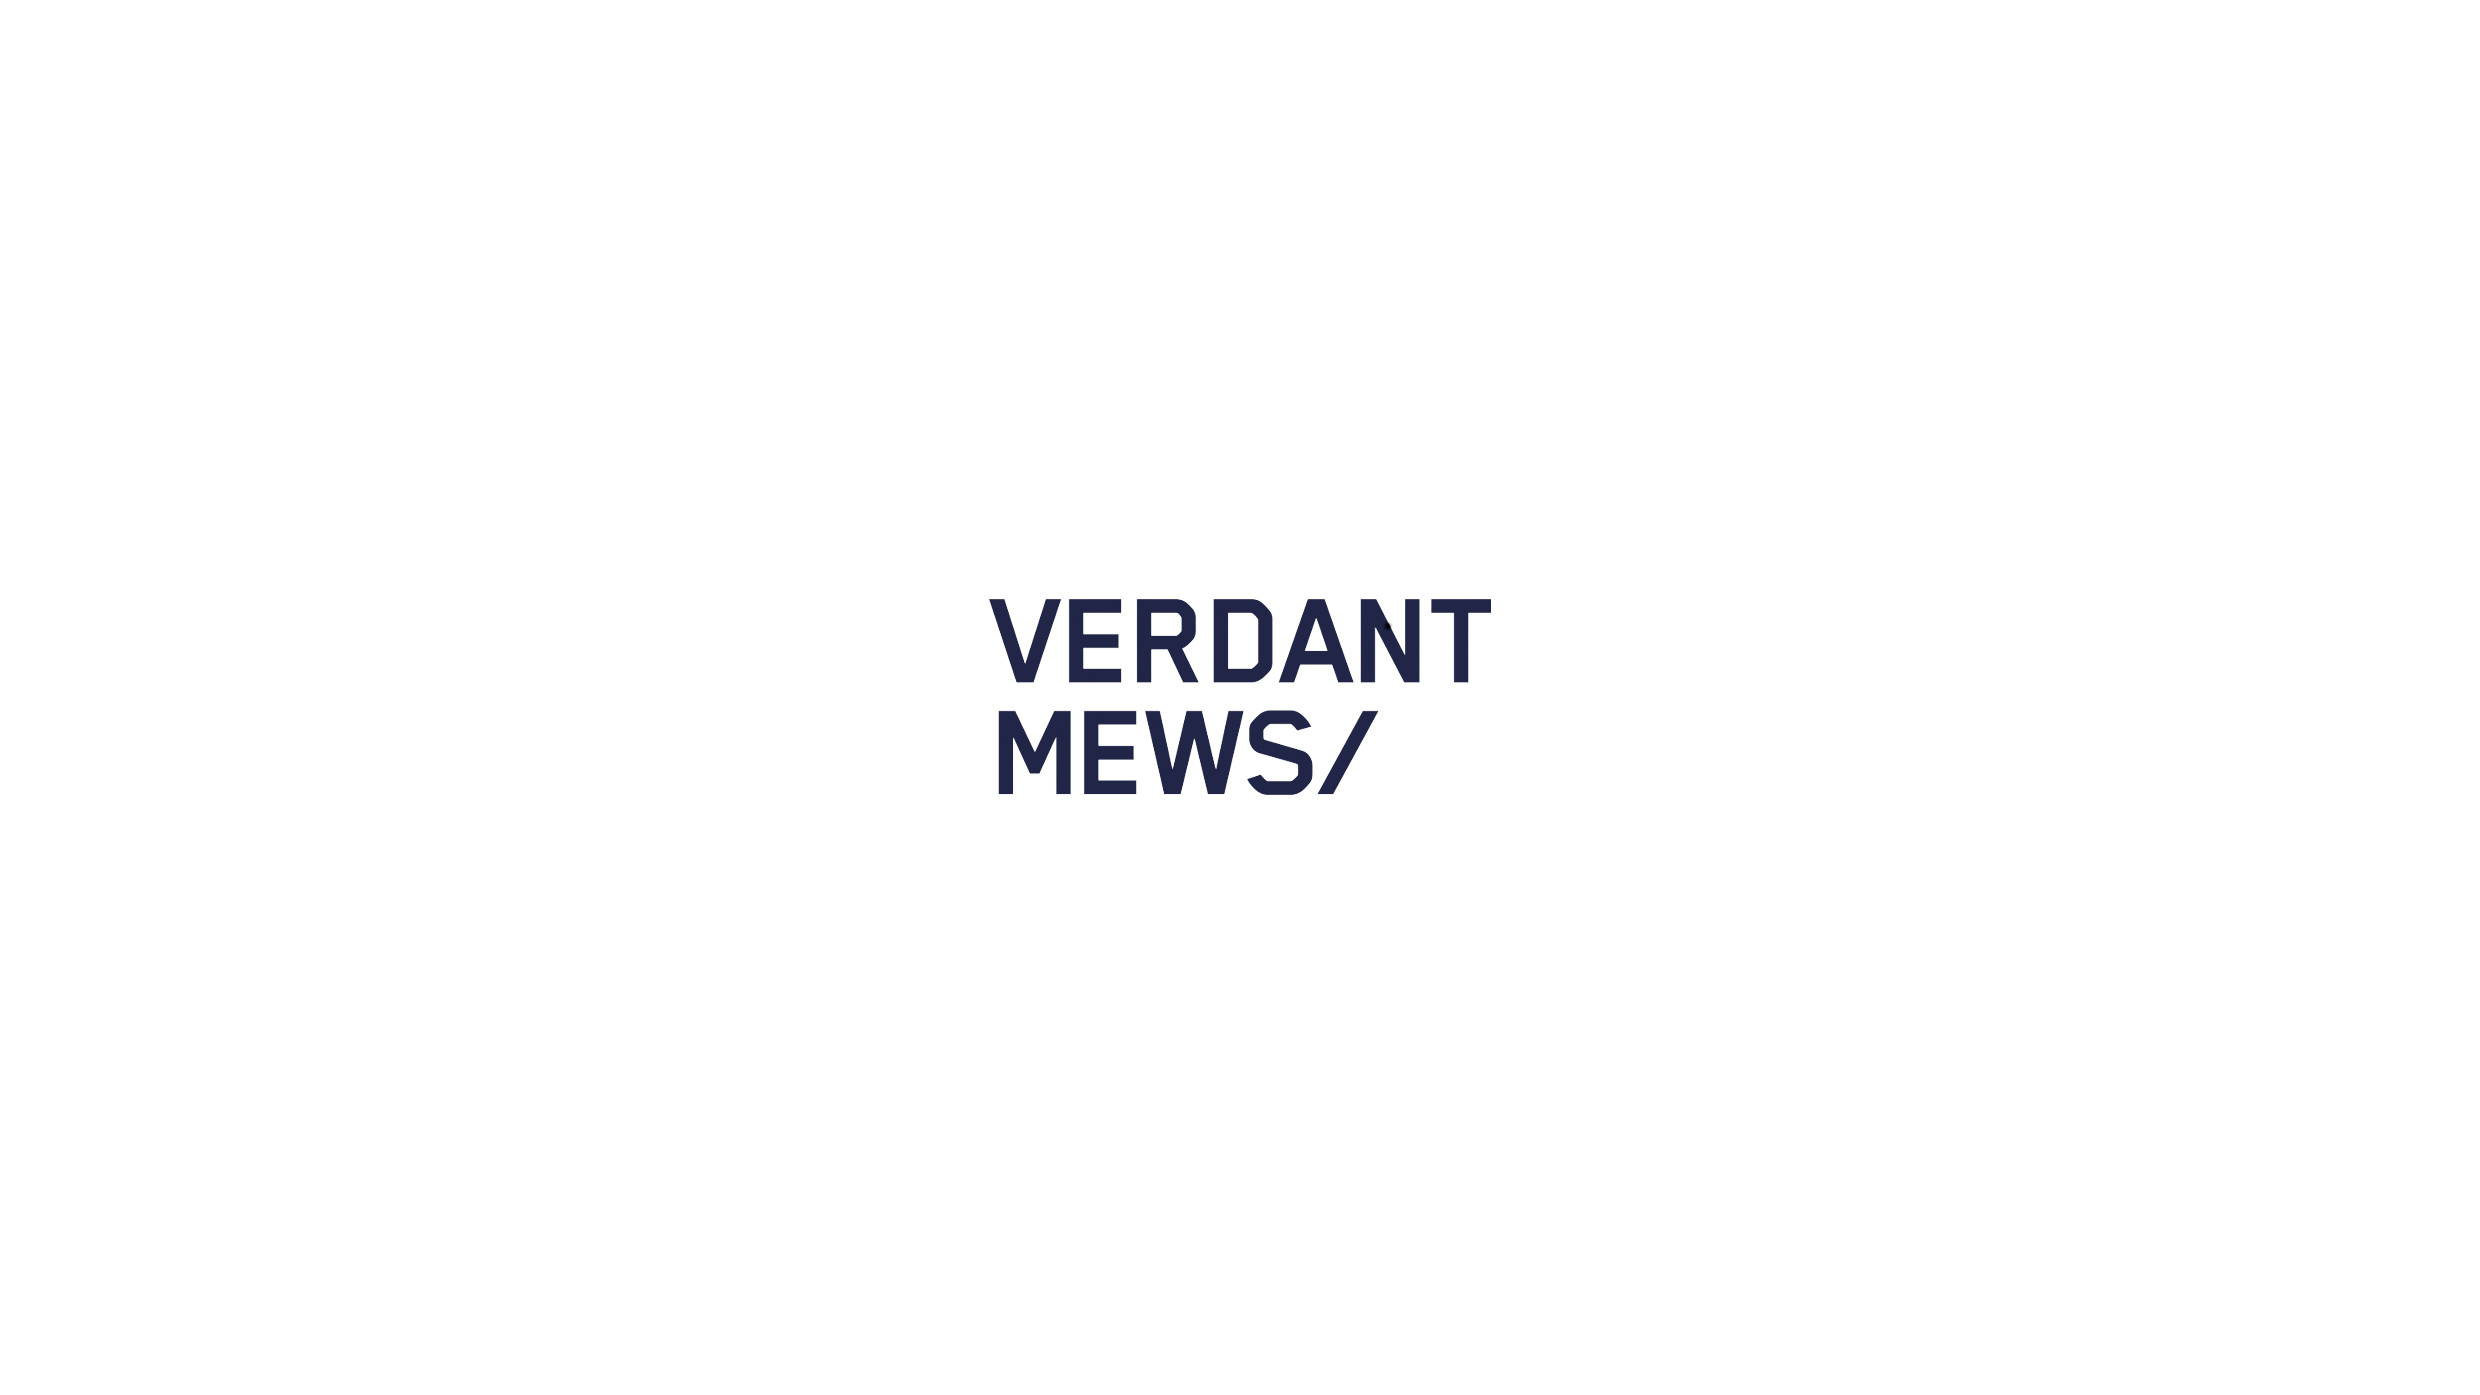 Logo of Verdant Mews development in Upper Norwood.